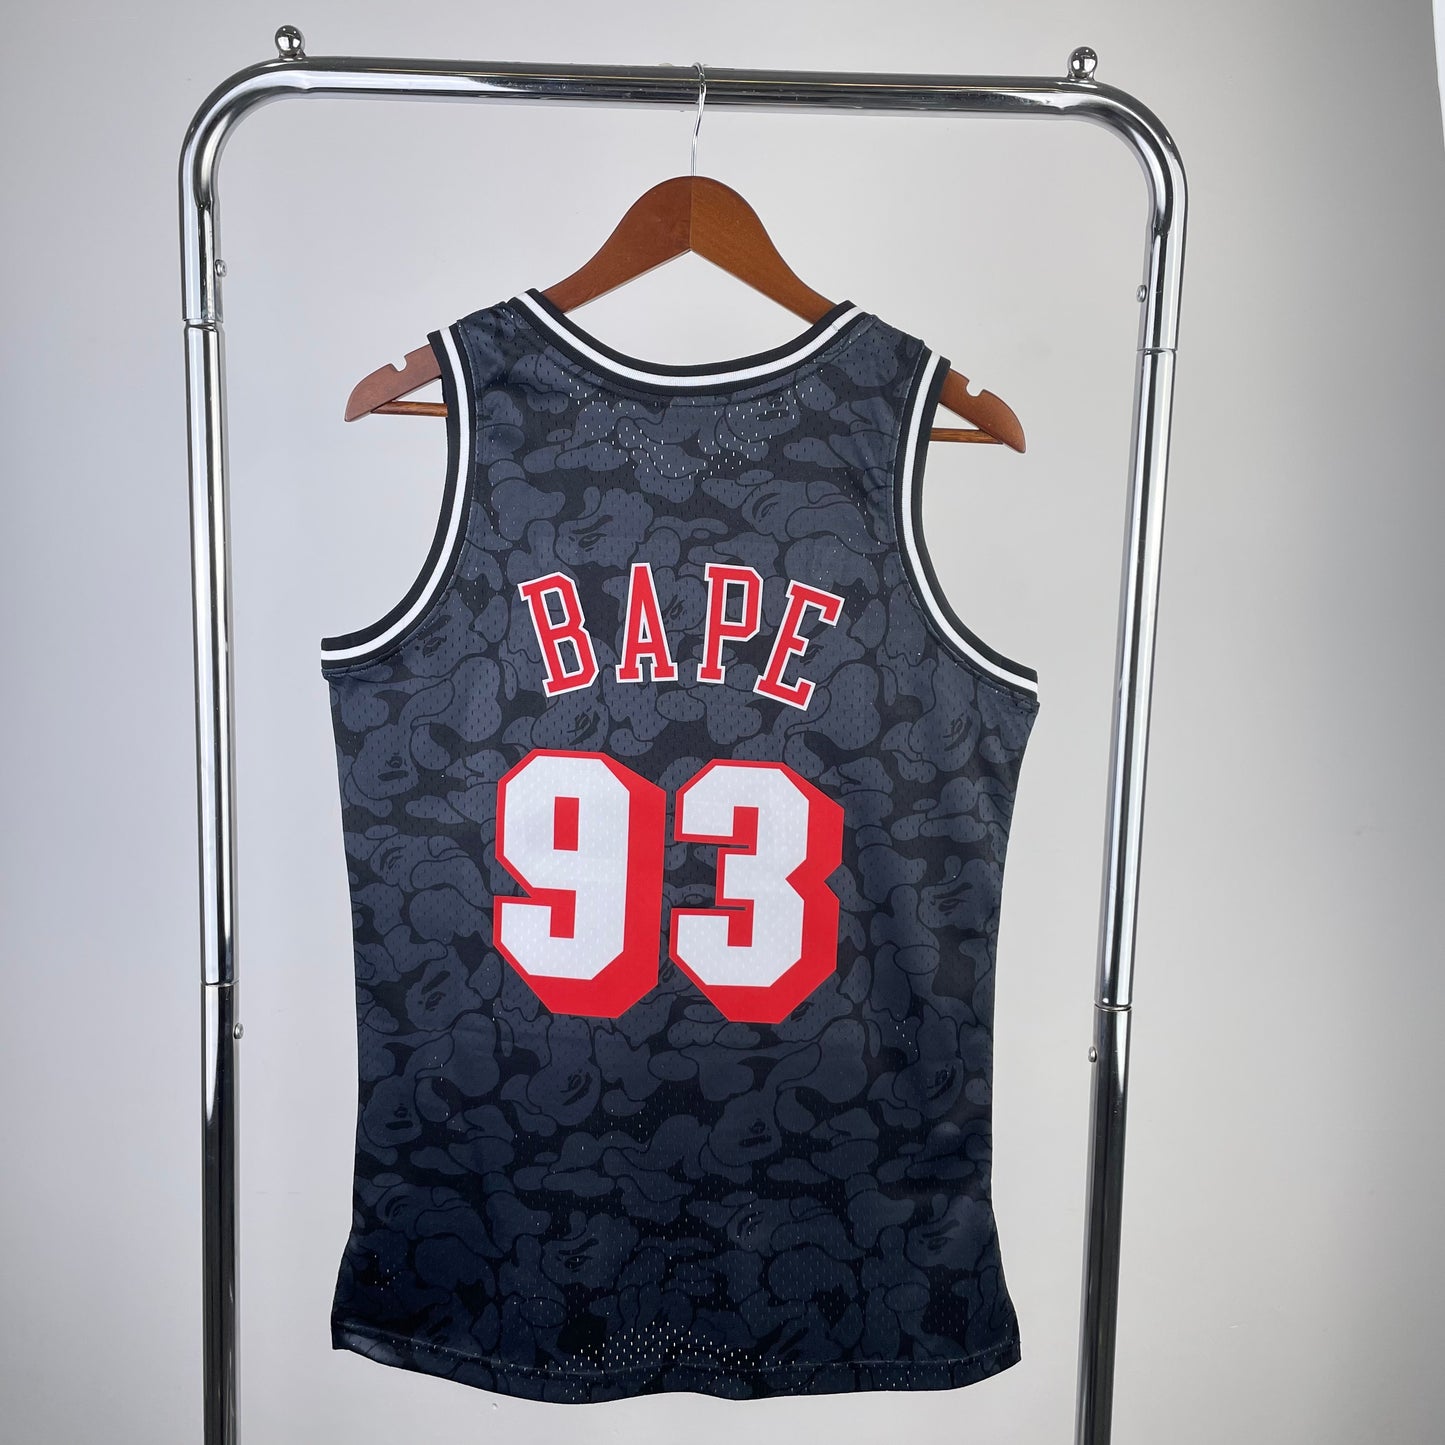 ‘A Bathing Ape’ (Bape) Brand NBA Miami Heat Mitchell & Ness Hardwood Classic Black Jersey